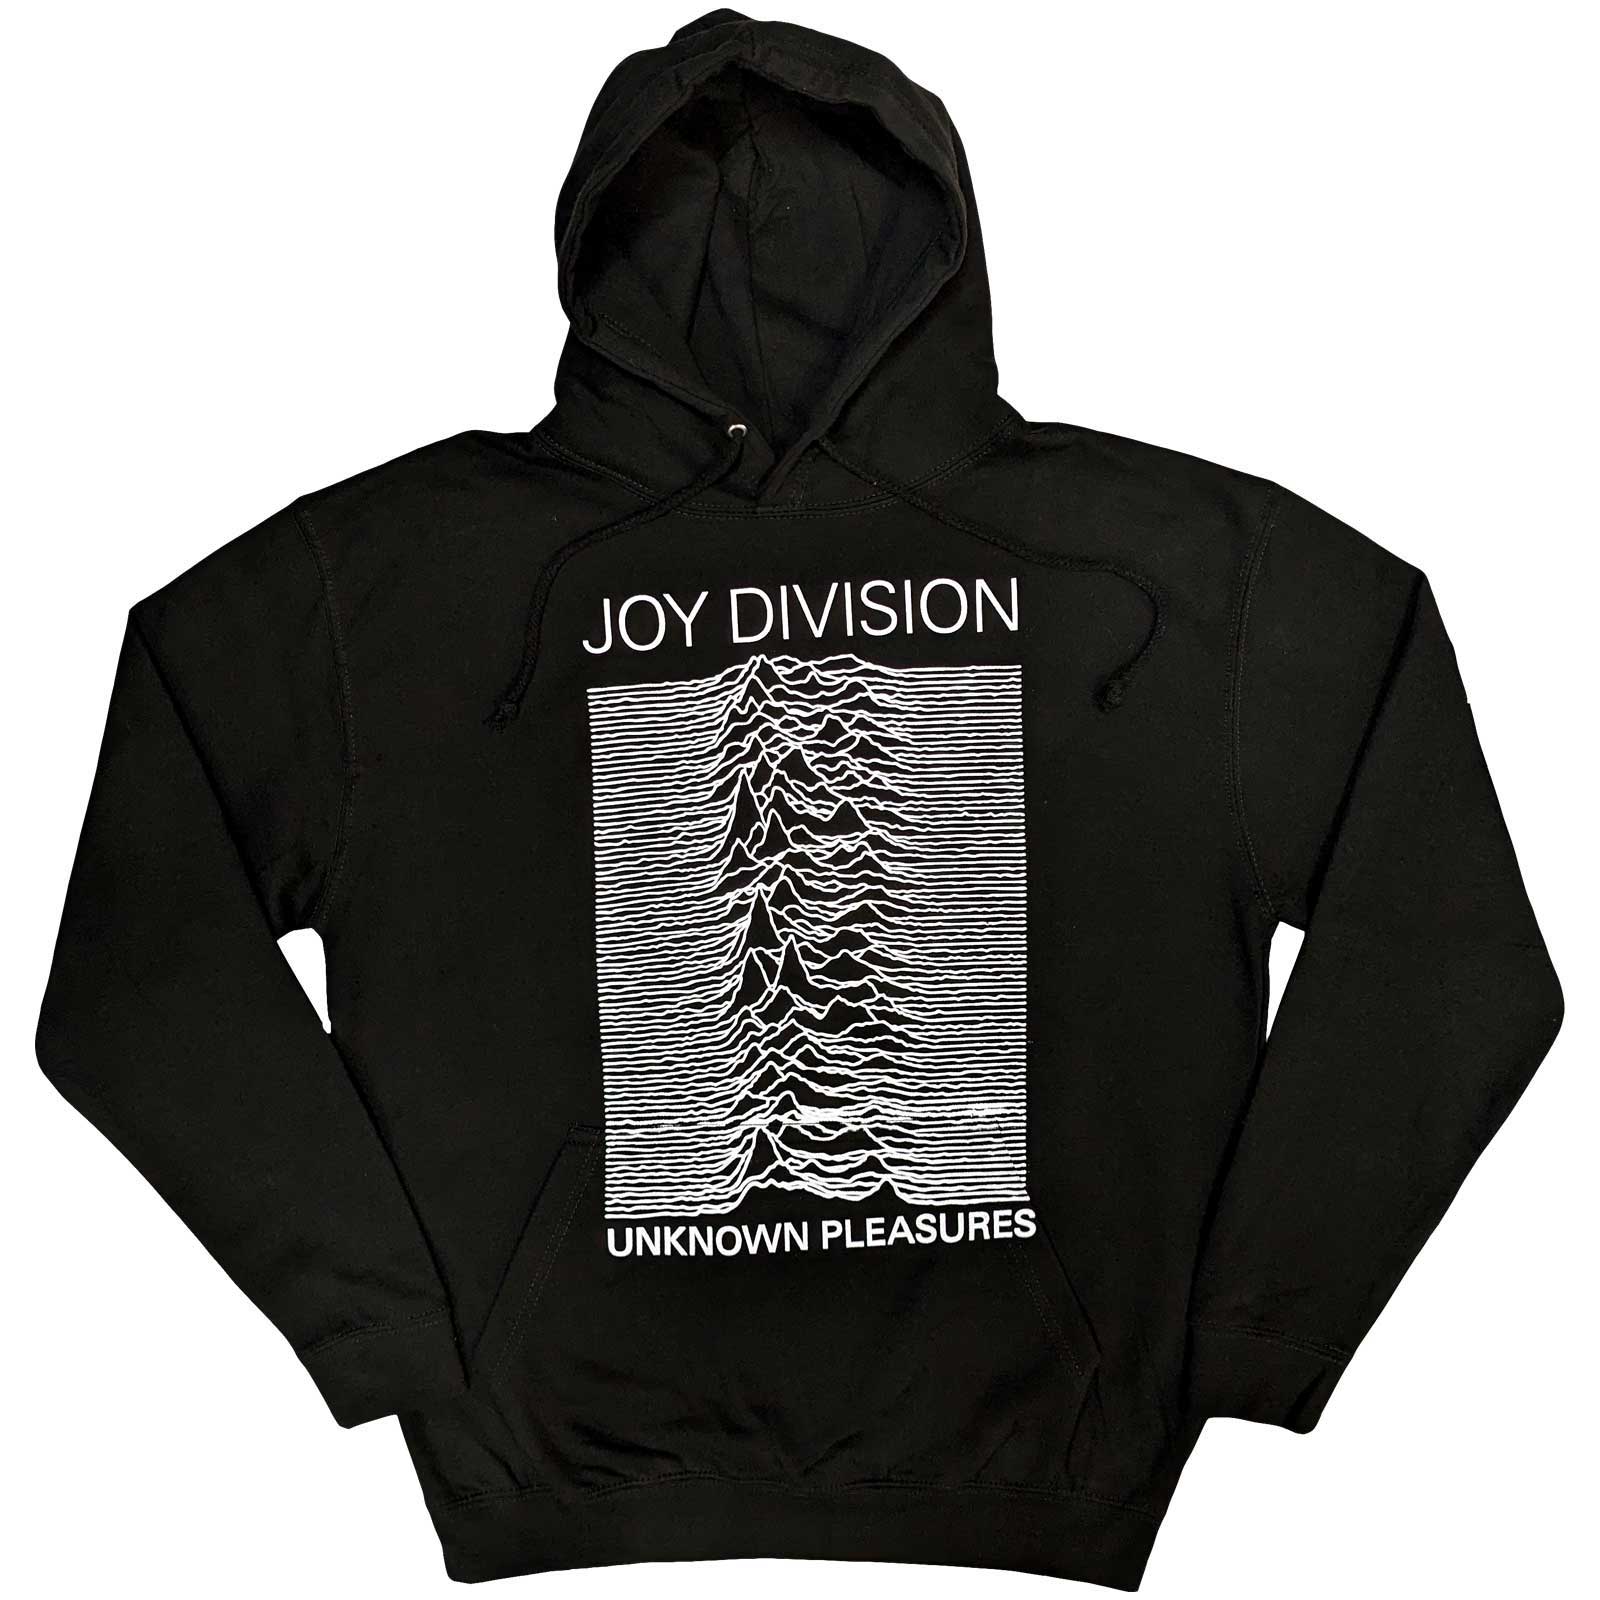 https://wildplanetmusic.com/product/joy-divisionunknown-pleasures-importpullover-hoodie-blackhdjoydiv001/